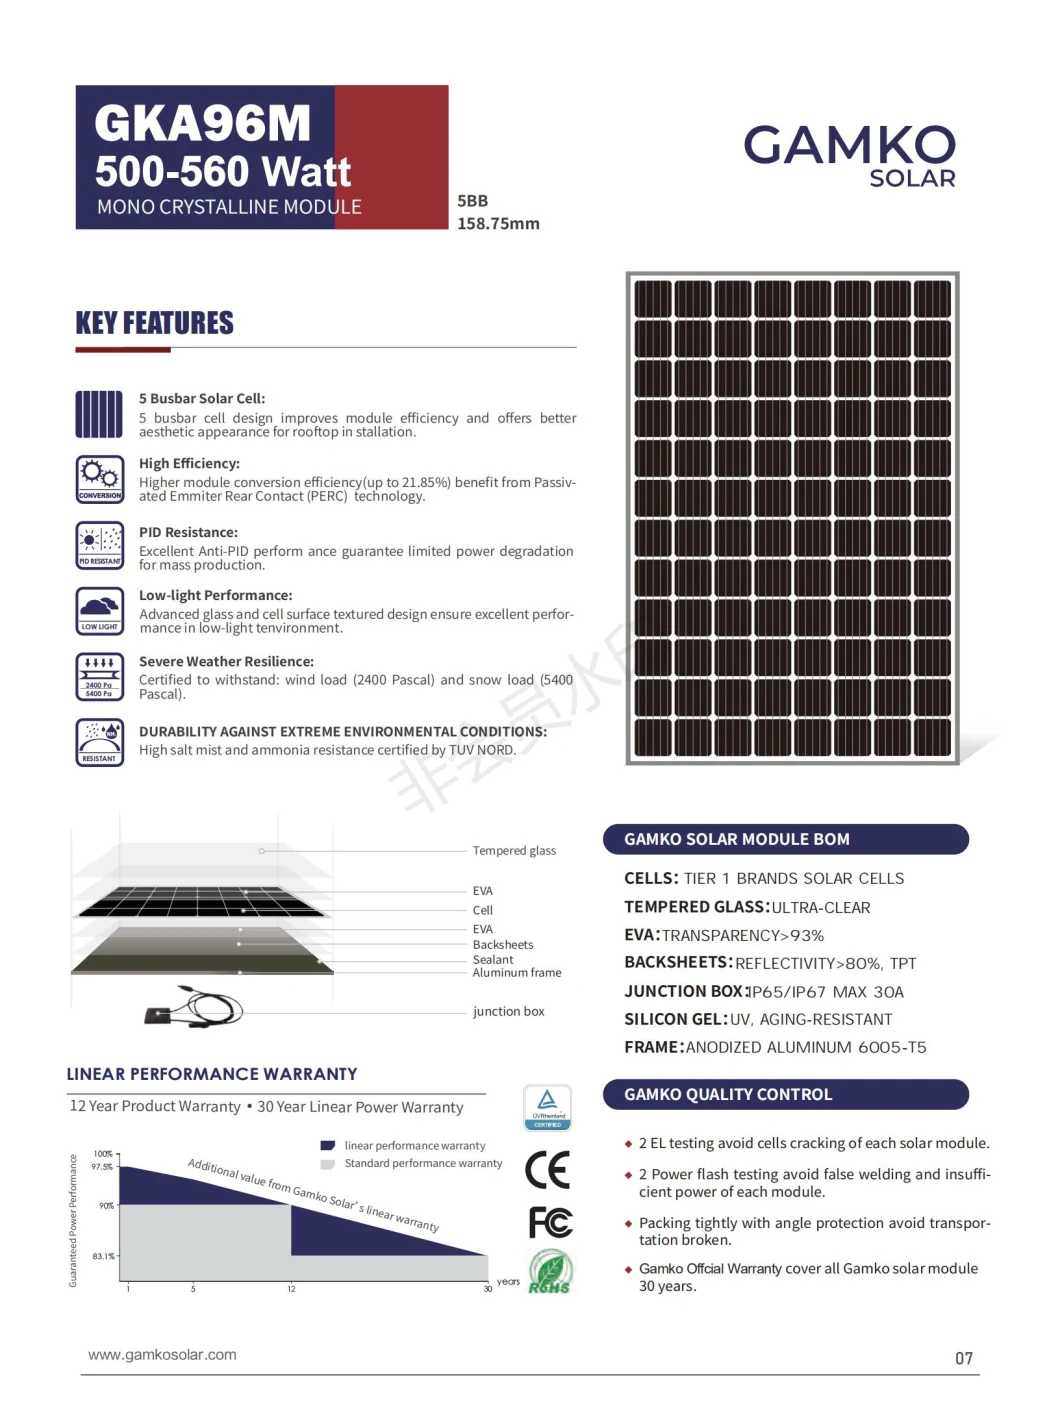 555W Best Solar Panel Company Cost of Solar Panels Per Square Foot Solar Panel Heates 500W 510W 520W 530W 540W 550W 560W